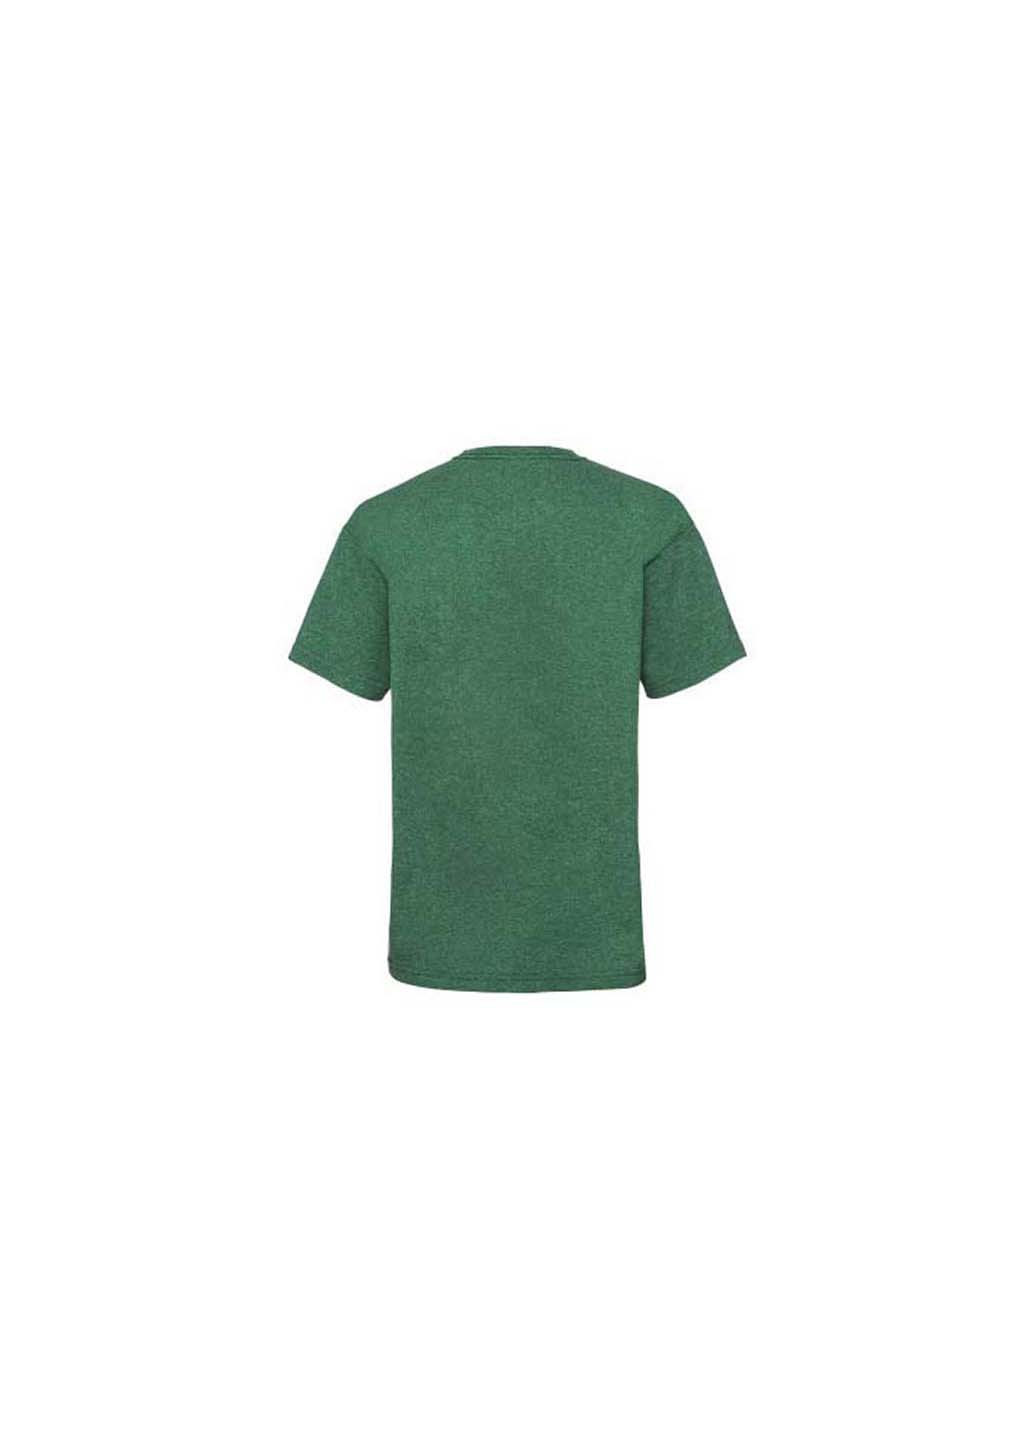 Зеленая демисезонная футболка Fruit of the Loom 0610330RX164